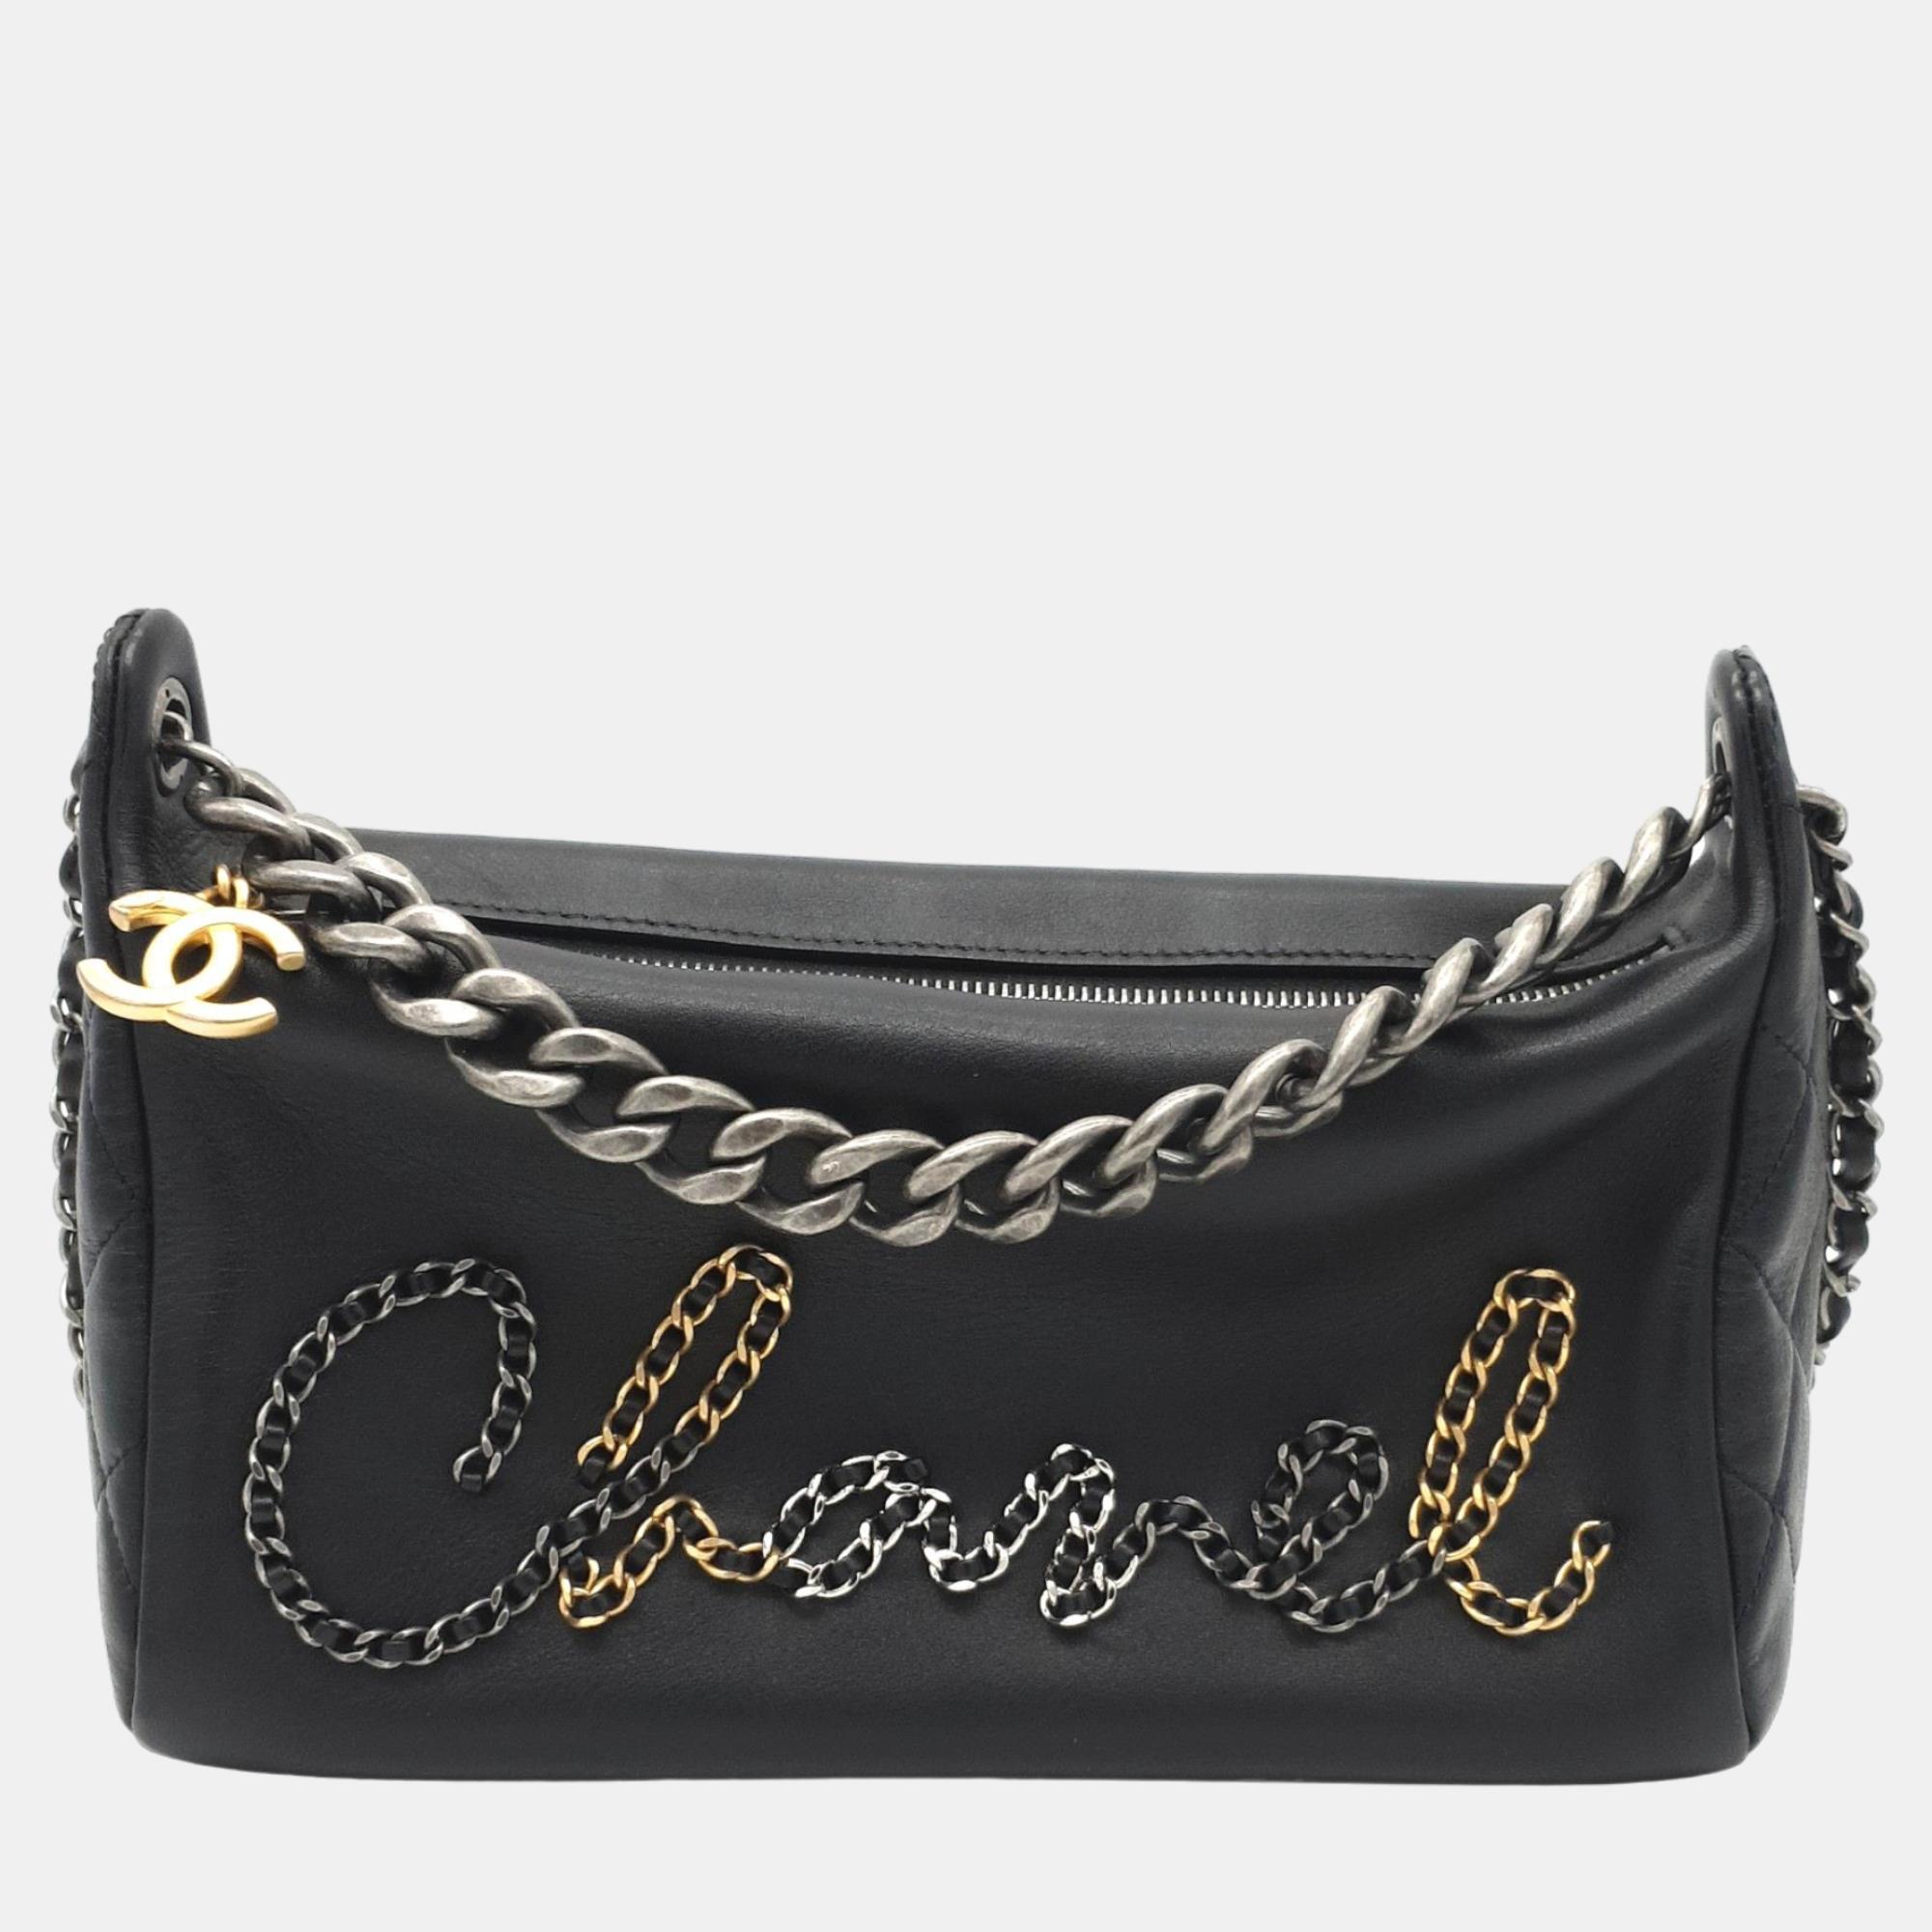 Chanel Black Leather Written In Chain Hobo Shoulder Bag